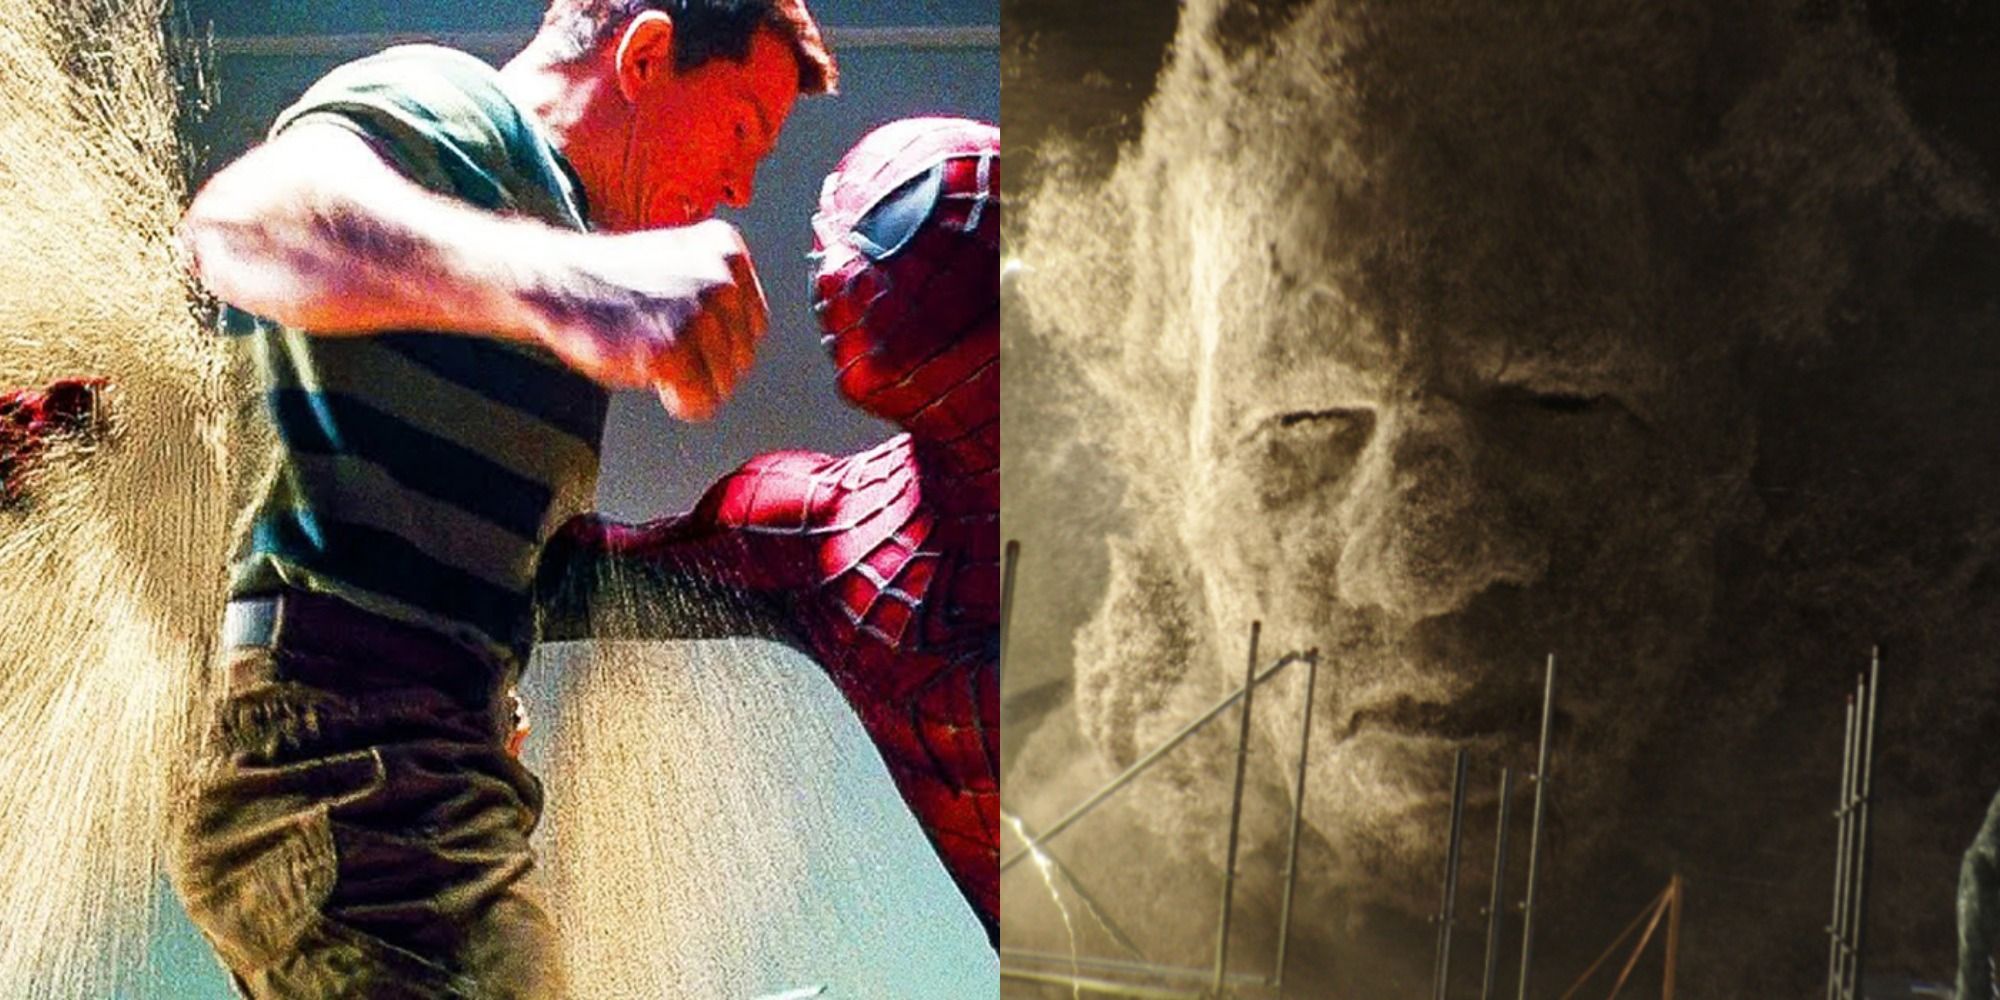 Split image of Sandman in Spider-Man 3 and Spider-Man: No Way Home